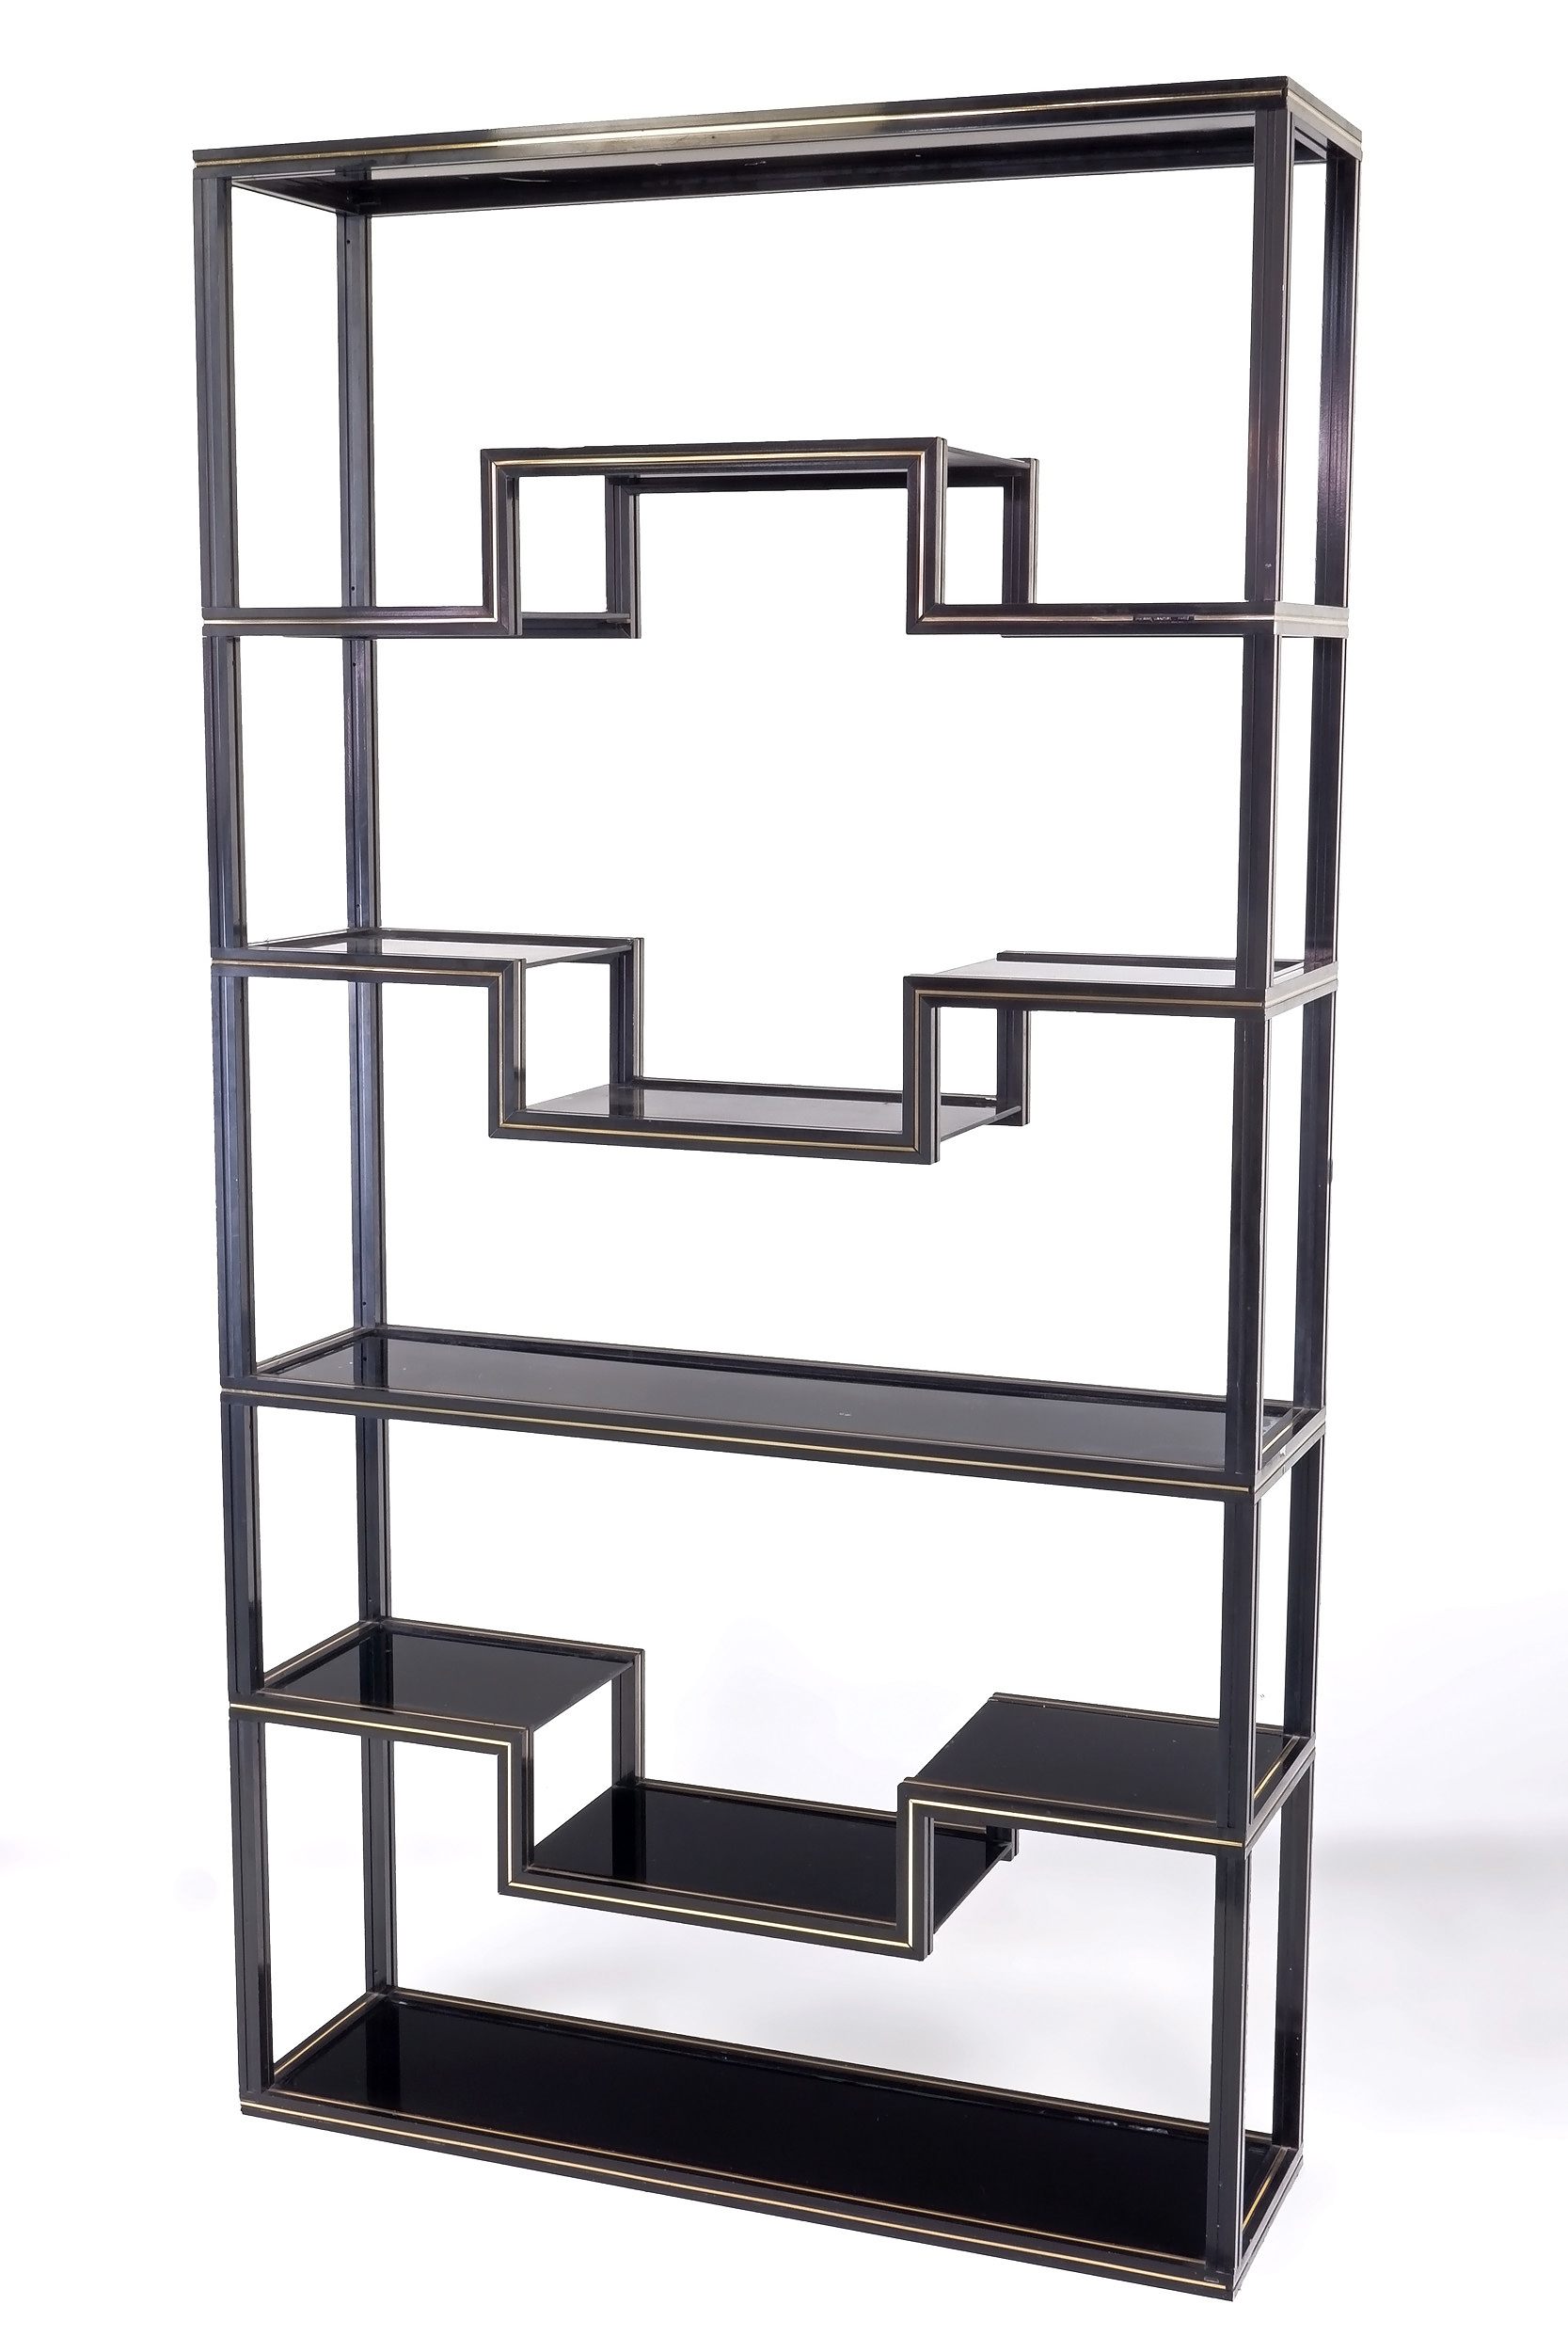 'Pierre Vandel Paris Black Lacquered Extruded Aluminium Etagere with Glass Shelves'